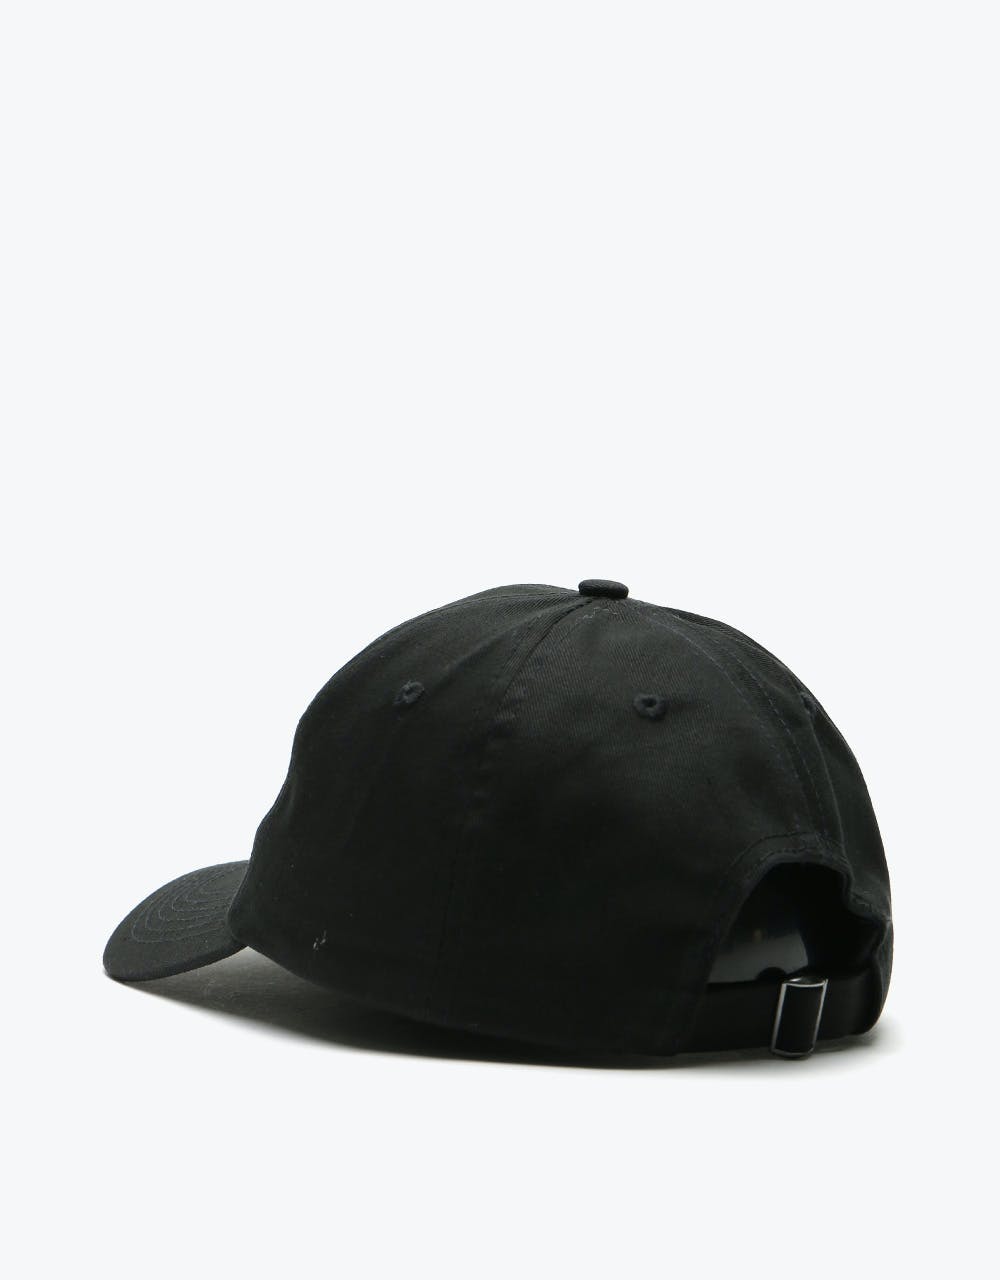 Independent Manner Cap - Black